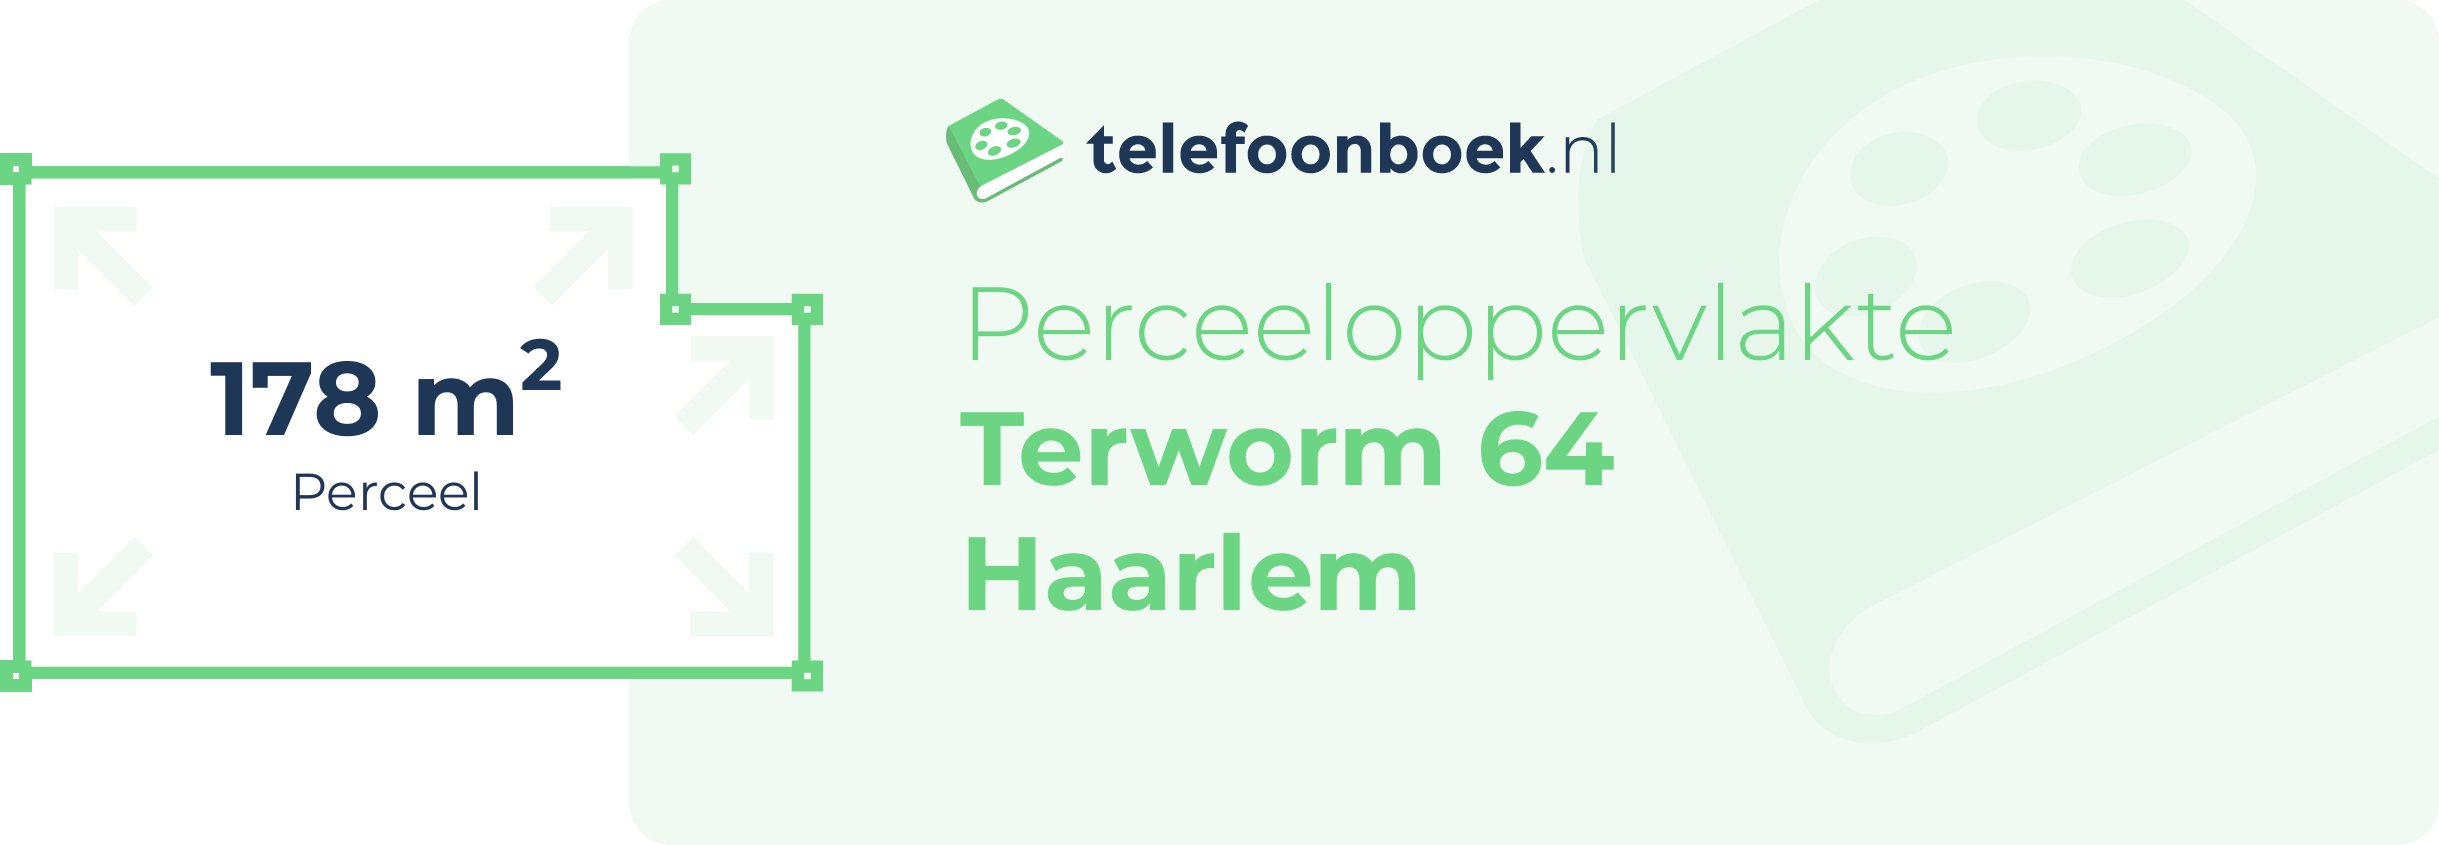 Perceeloppervlakte Terworm 64 Haarlem